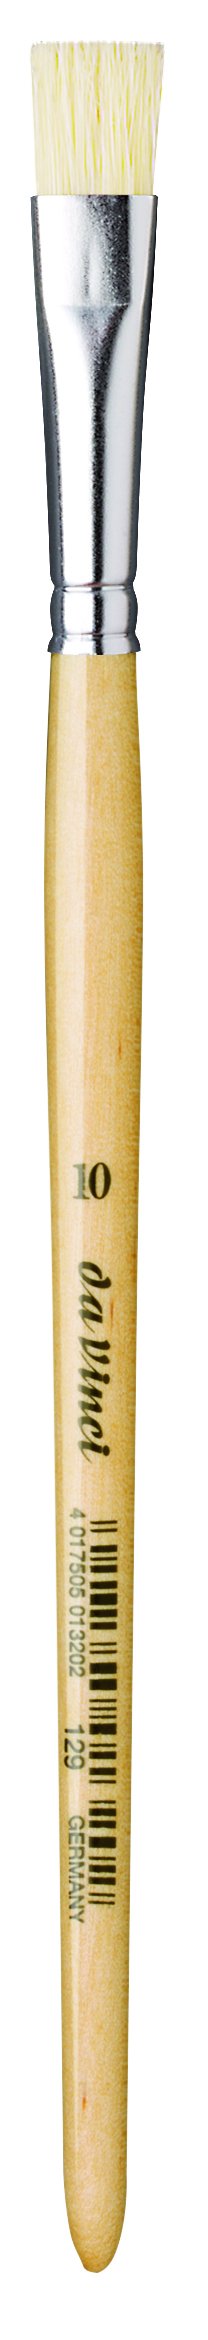 Pennelli Da Vinci Junior borste punta piatta setola sintetica n.10